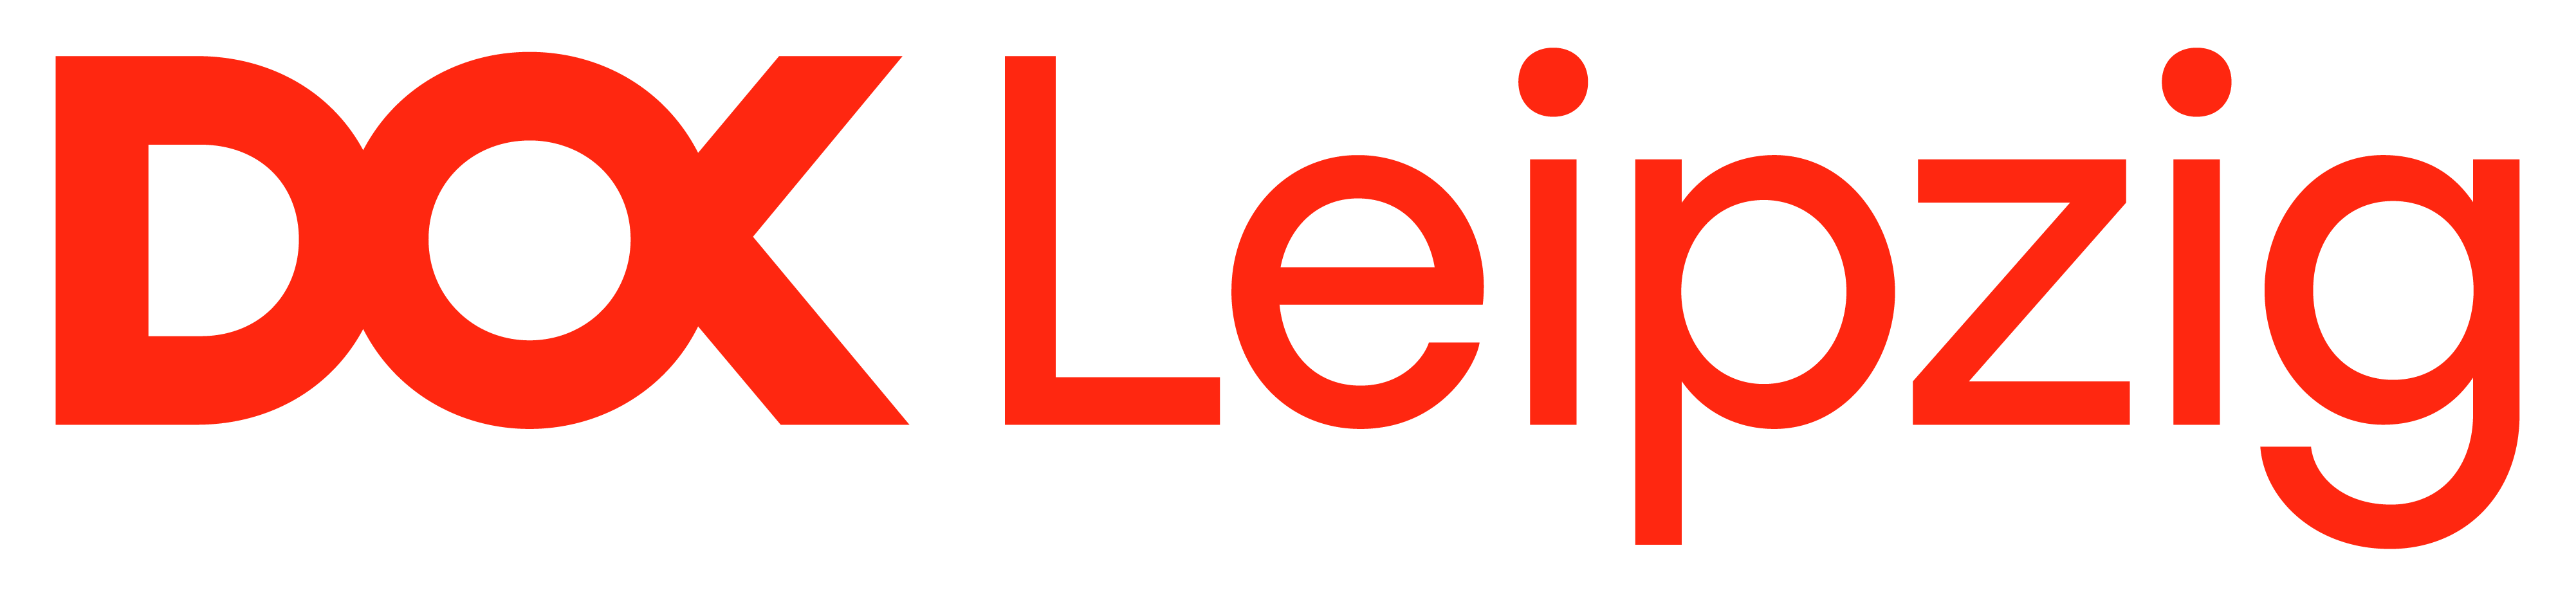 DOK Leipzig Logo 2020 red rgb